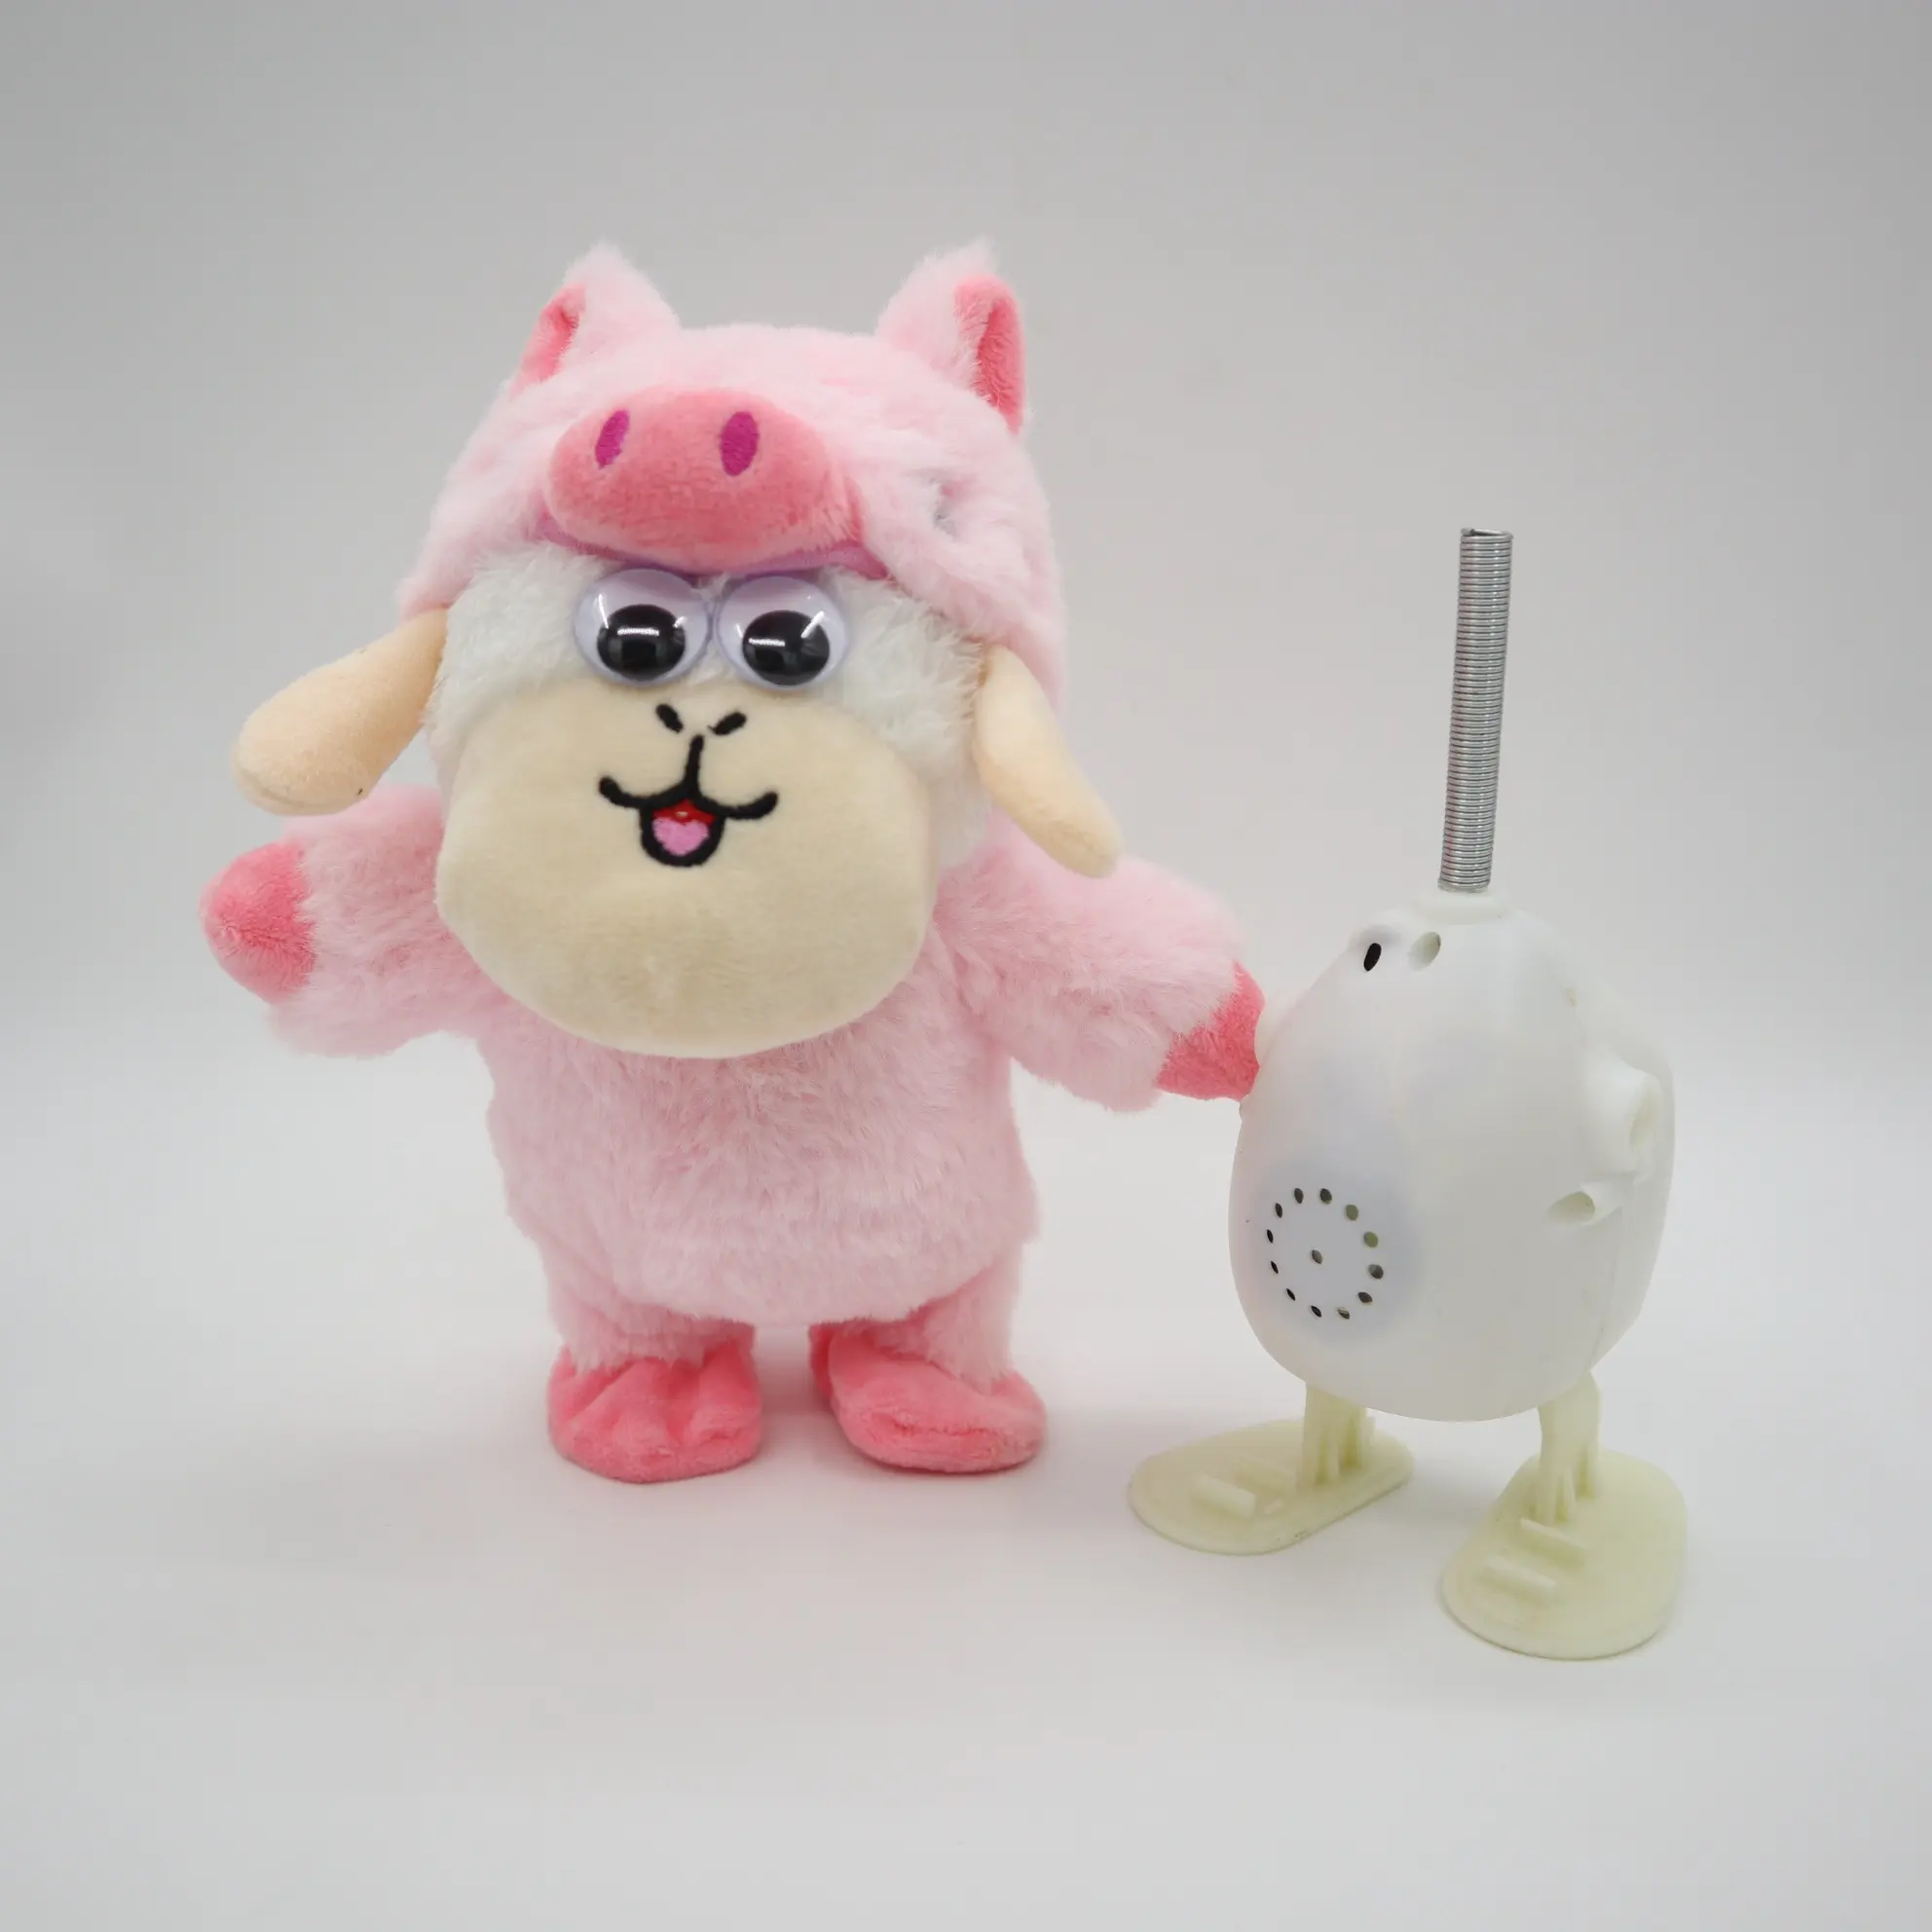 Moving walking music battery operated stuffed animal sheep plush electronic toy